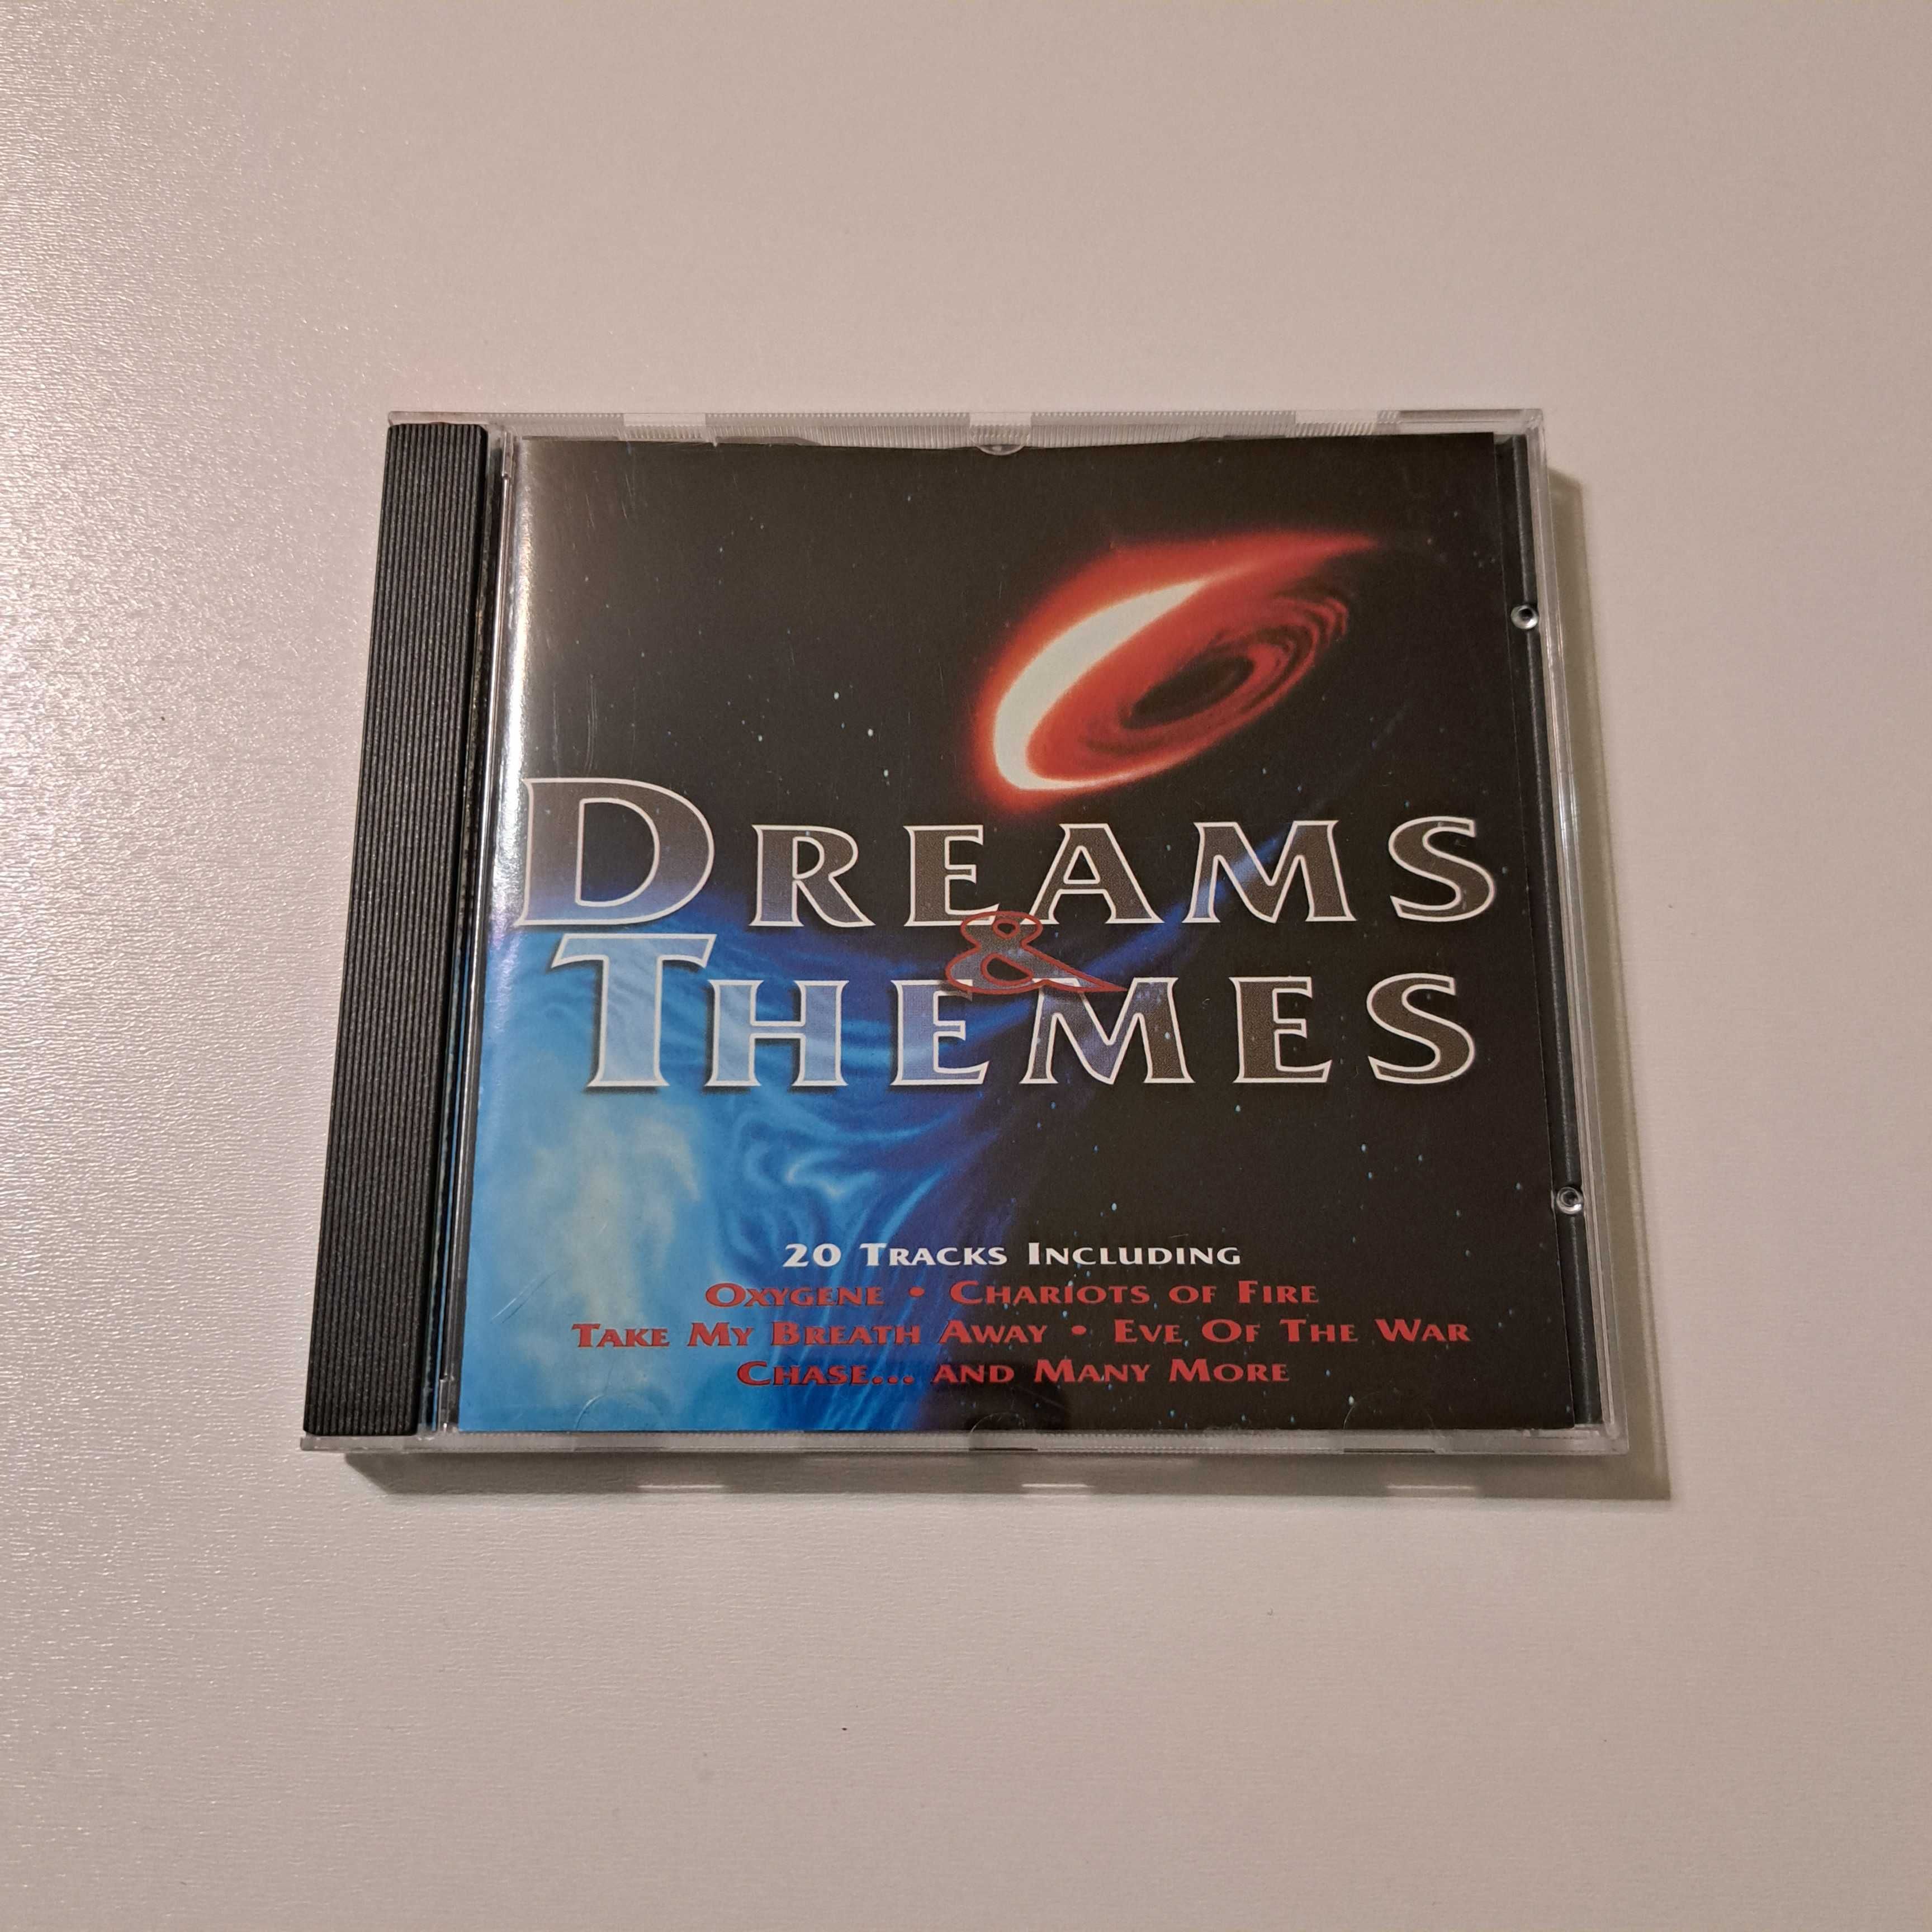 Płyta CD  Dreams Themes  nr764